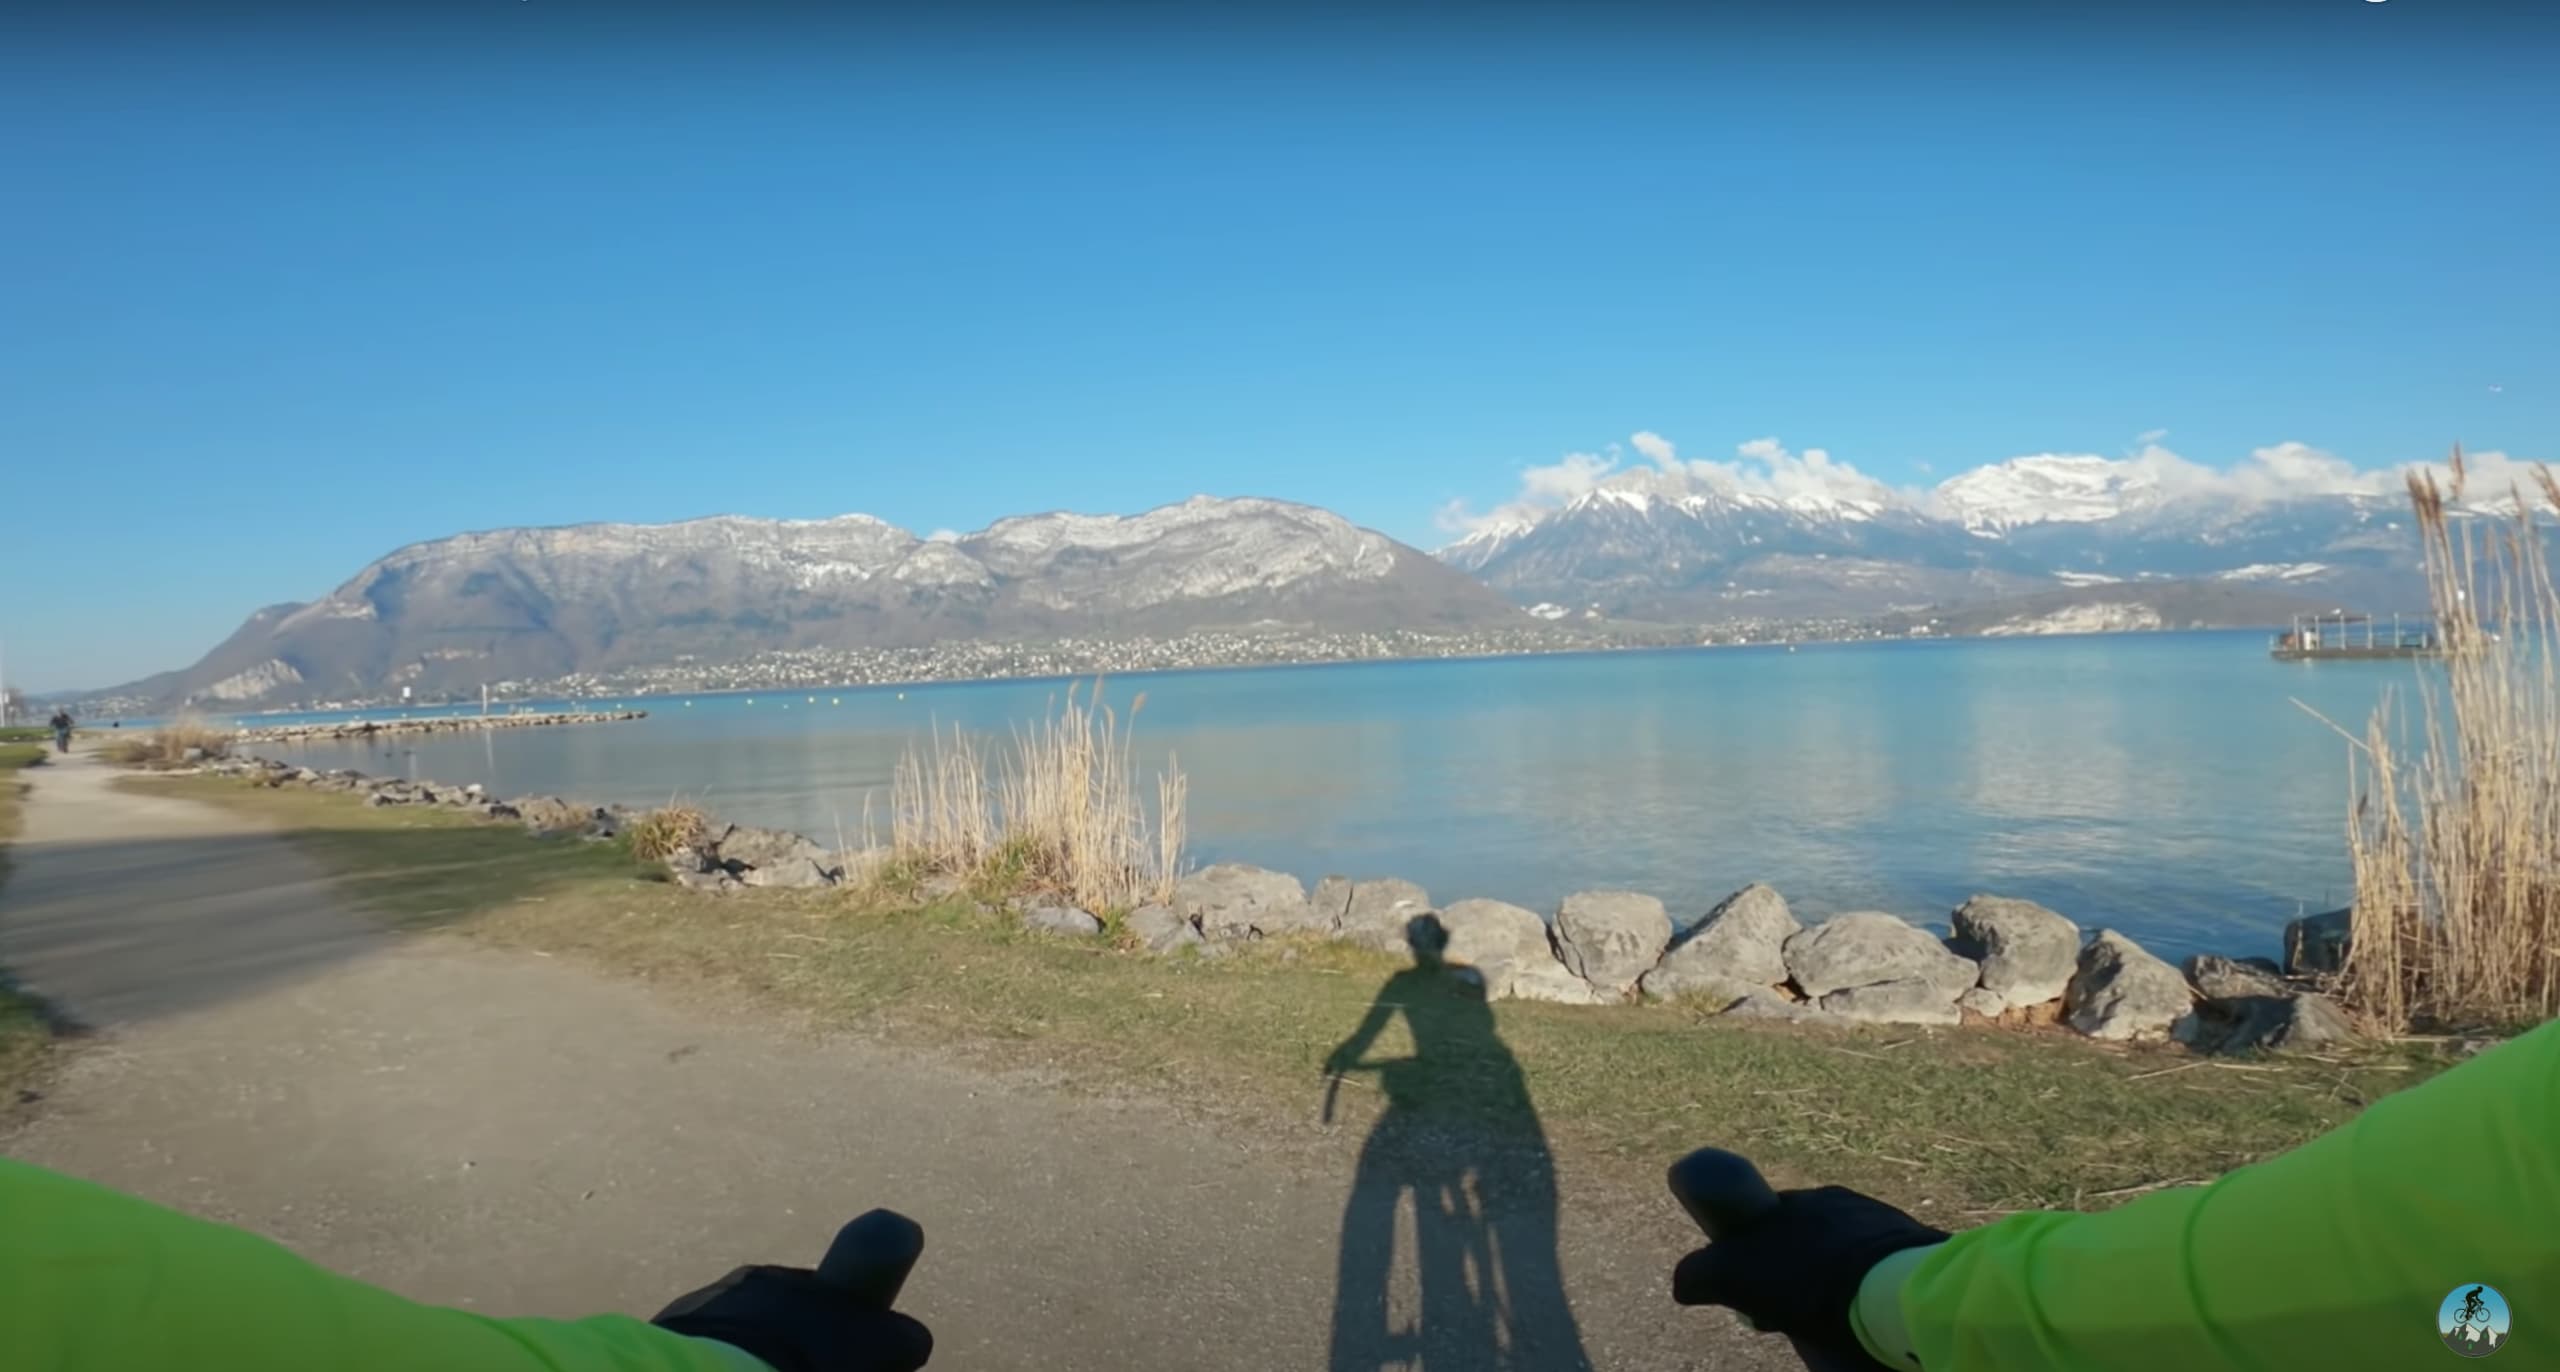 parcours piste cyclable lac annecy